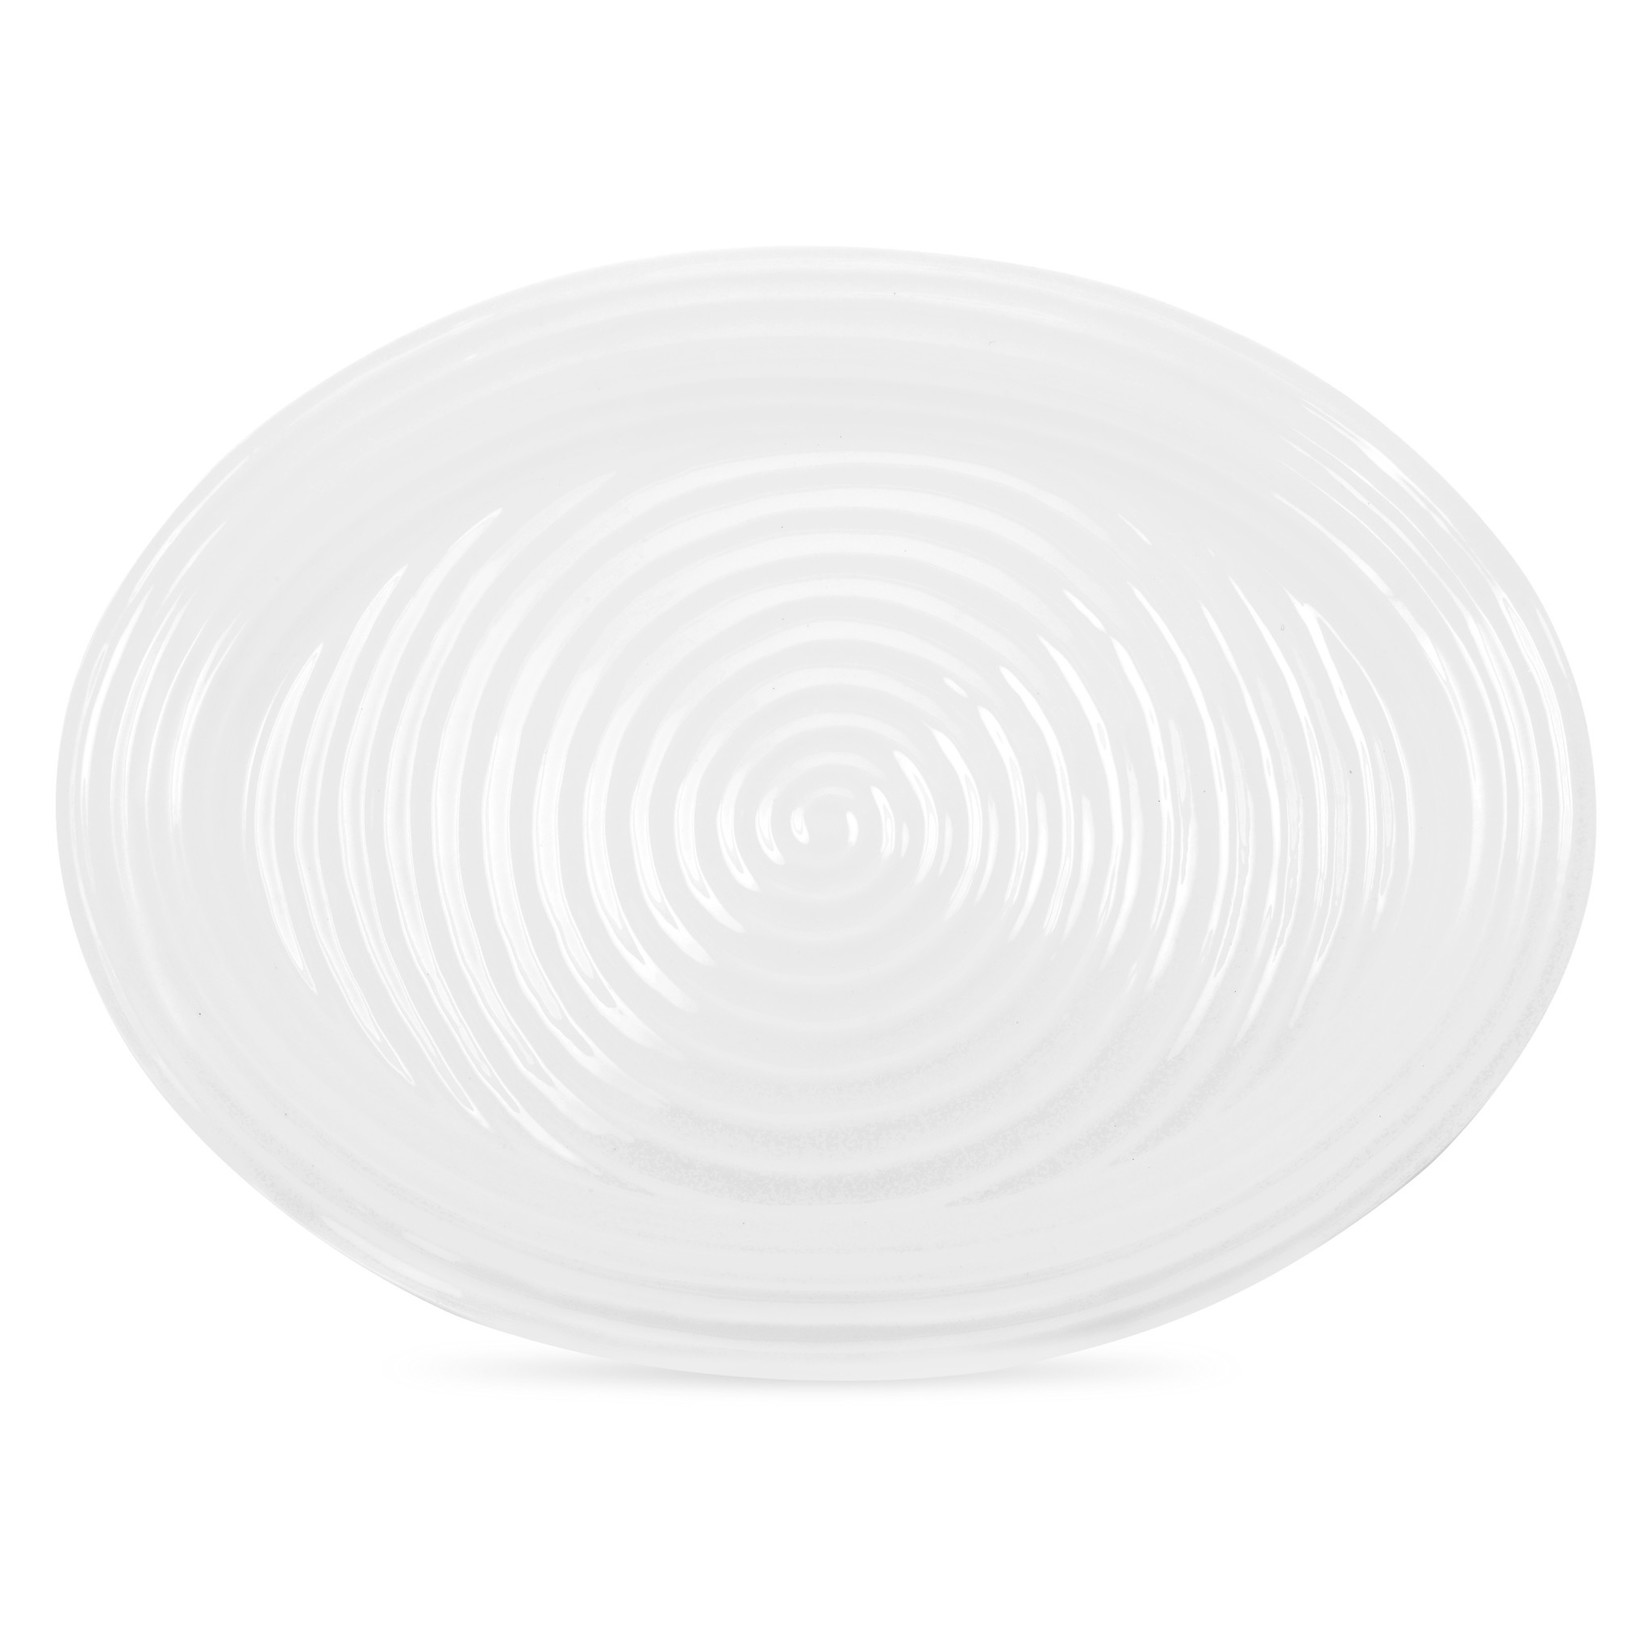 SOPHIE CONRAN SOPHIE CONRAN Turkey Platter Large 20" - White